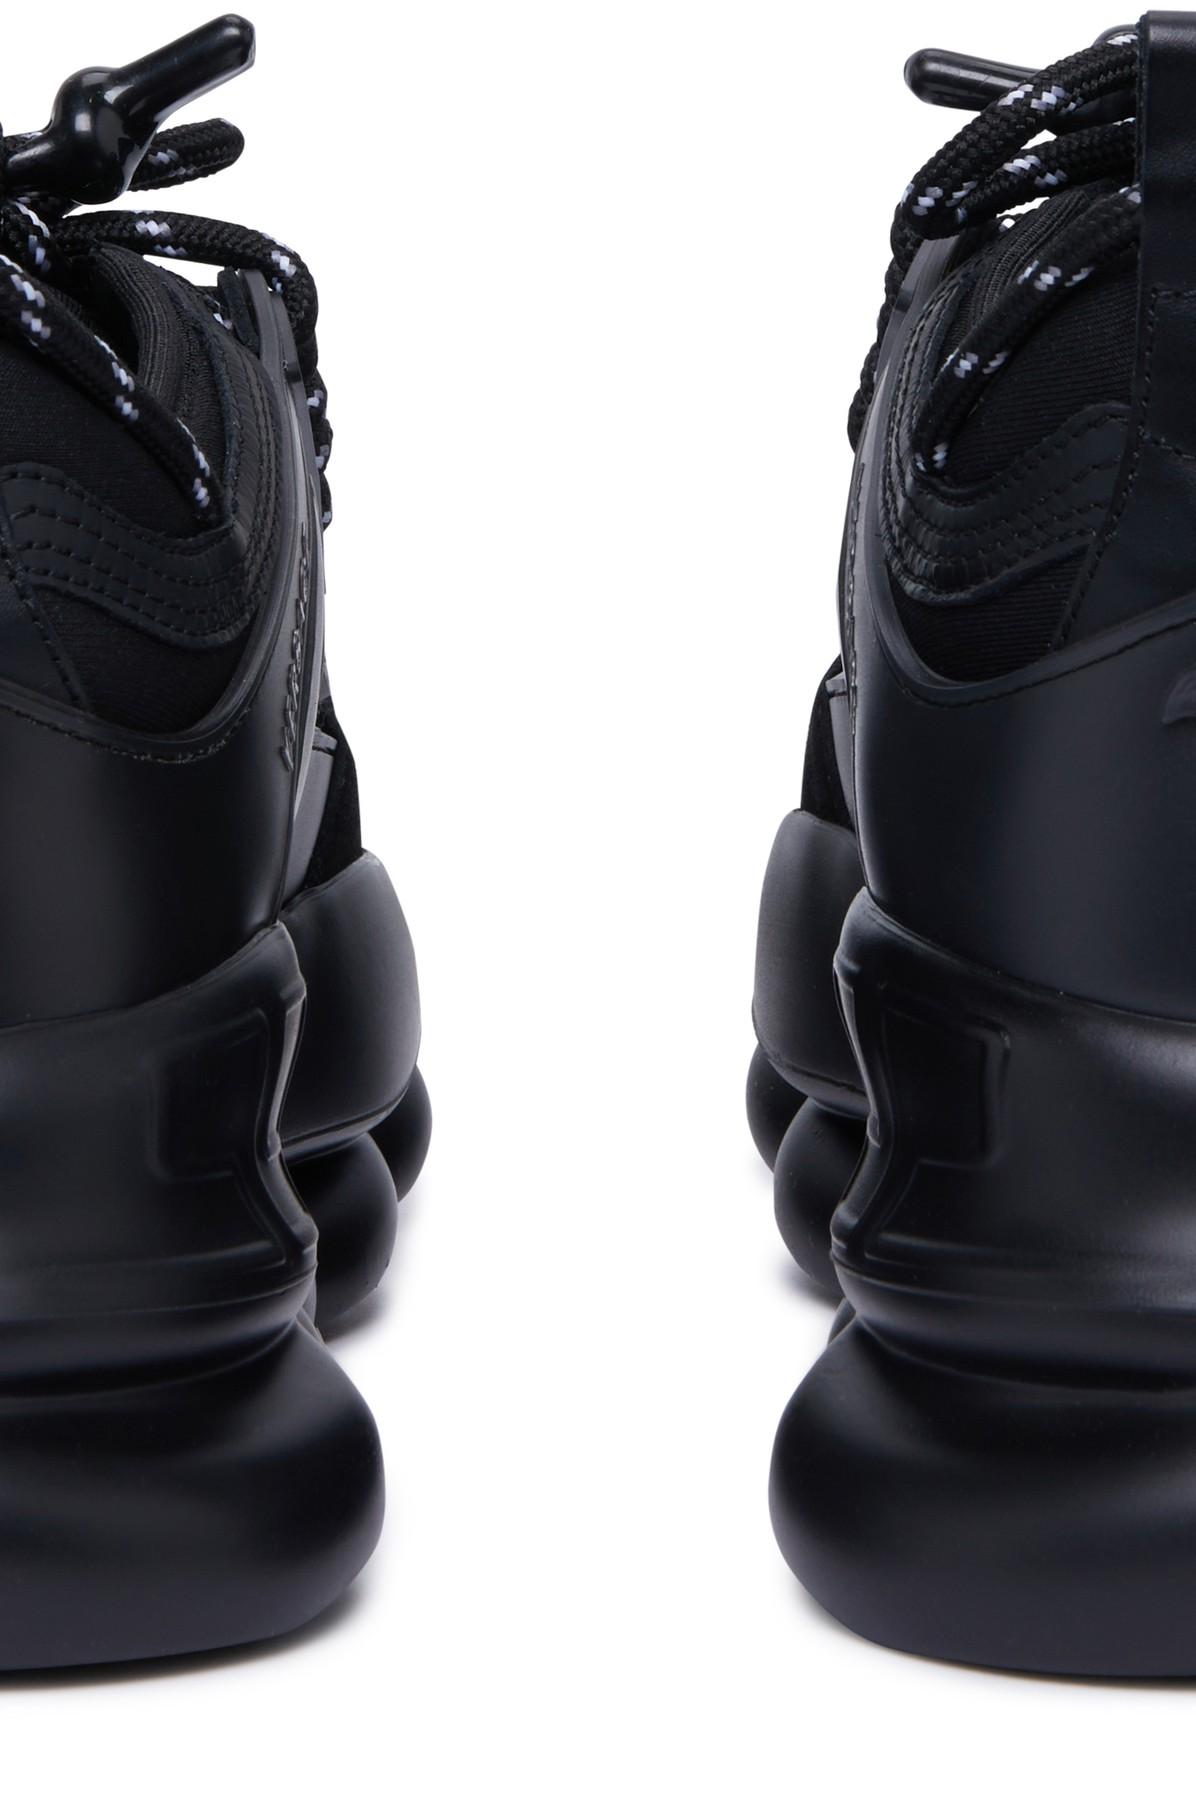 Versace Chain Reaction Sneakers in Black | Lyst